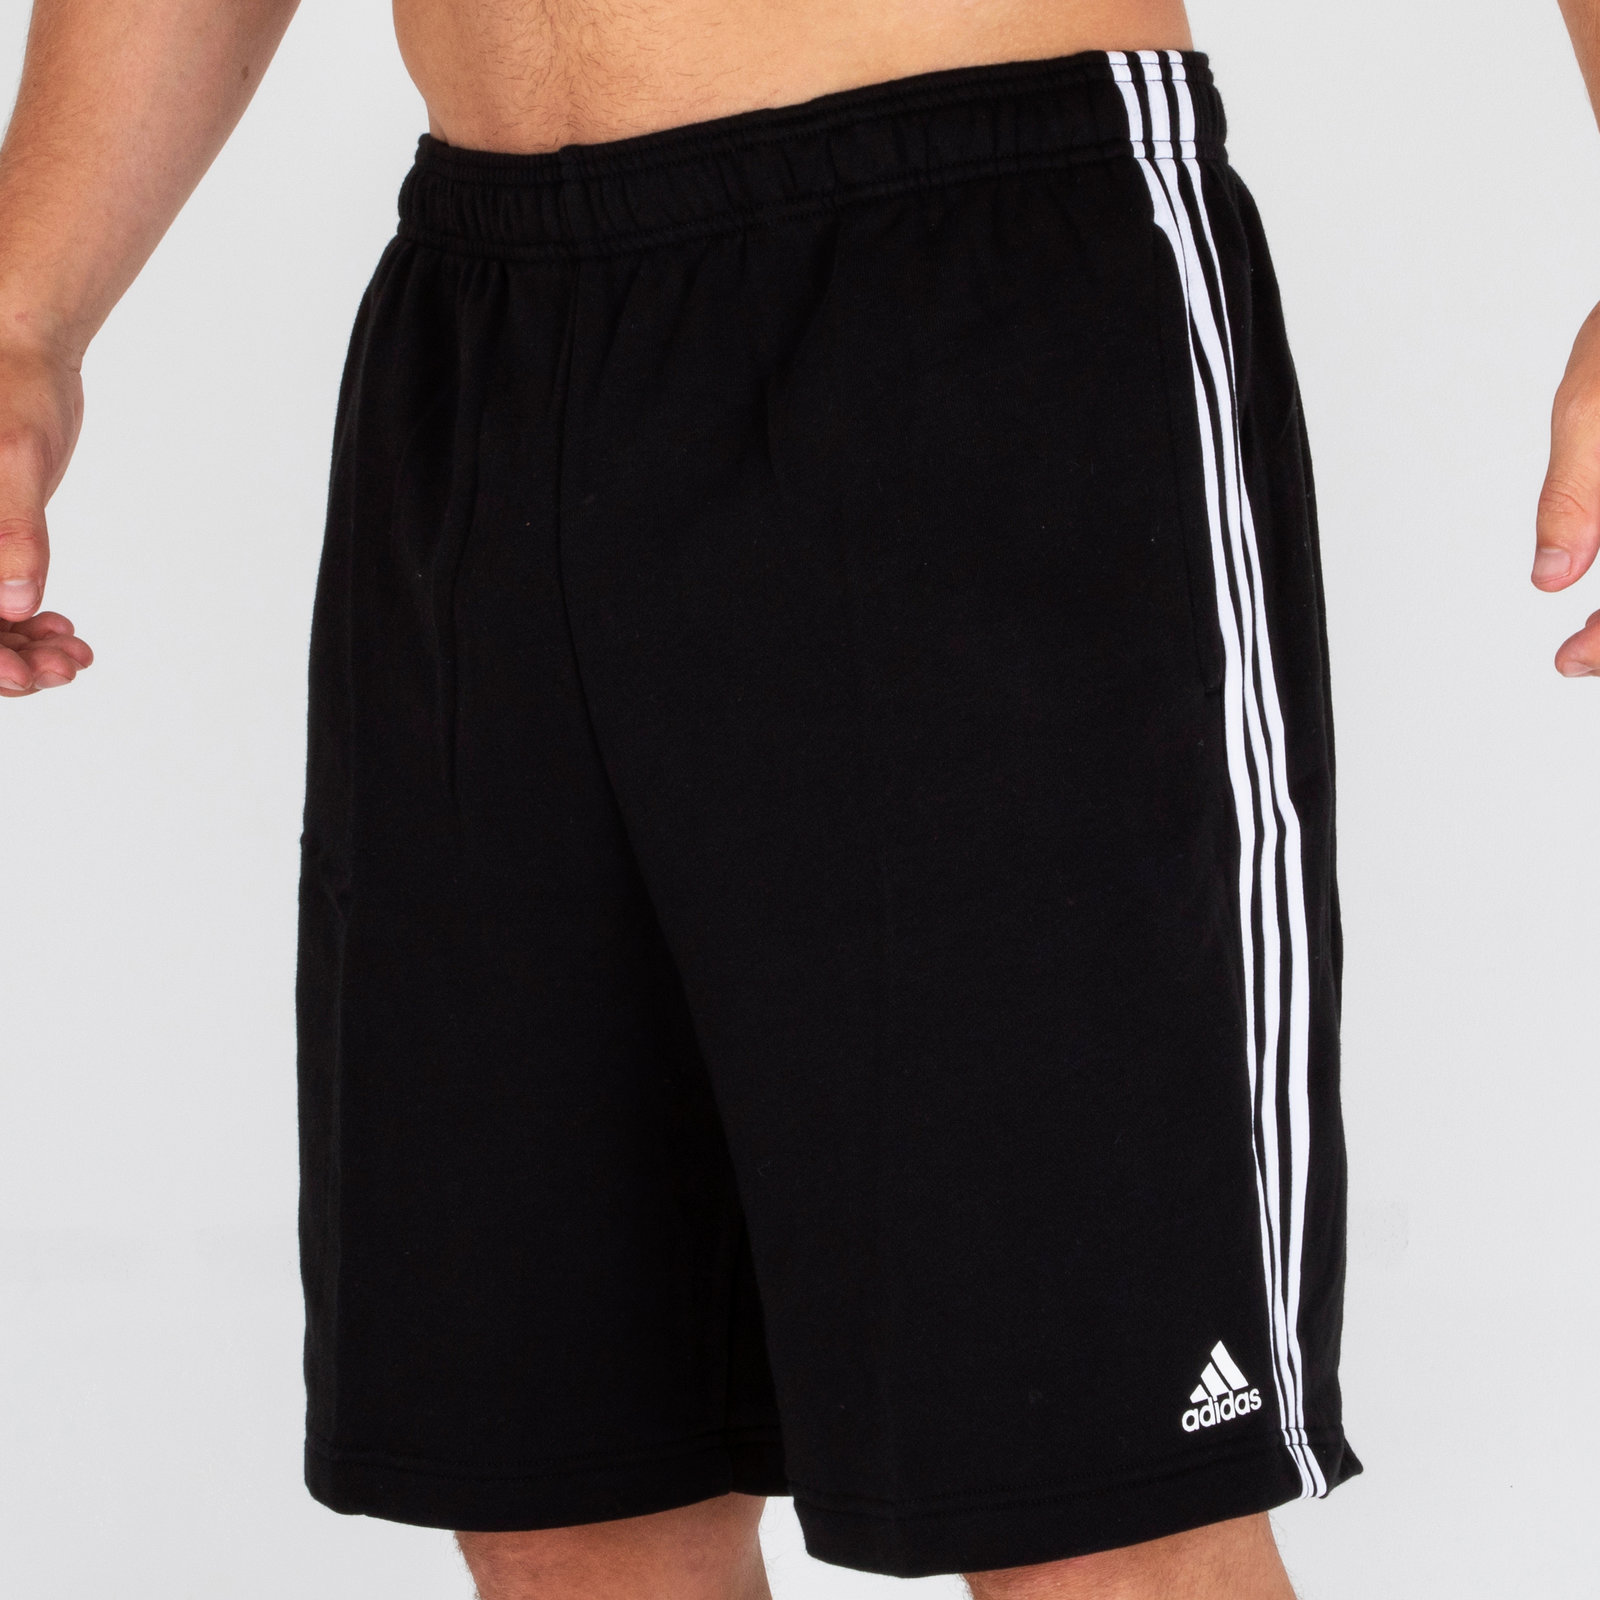 adidas 3 stripe shorts black